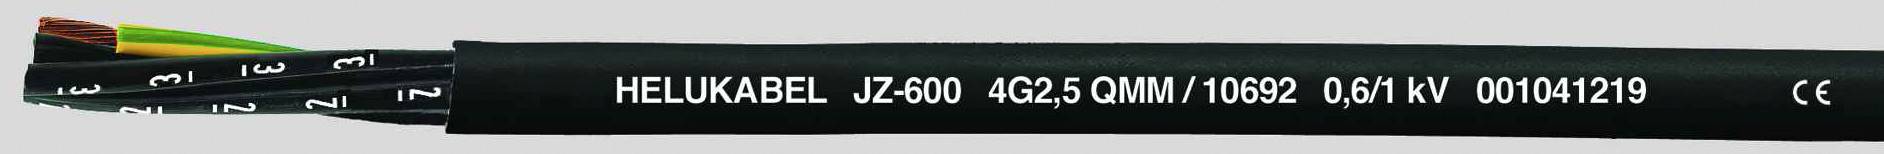 HELUKABEL JZ-600 Steuerleitung 8 G 1.50 mm² Schwarz 10666-500 500 m